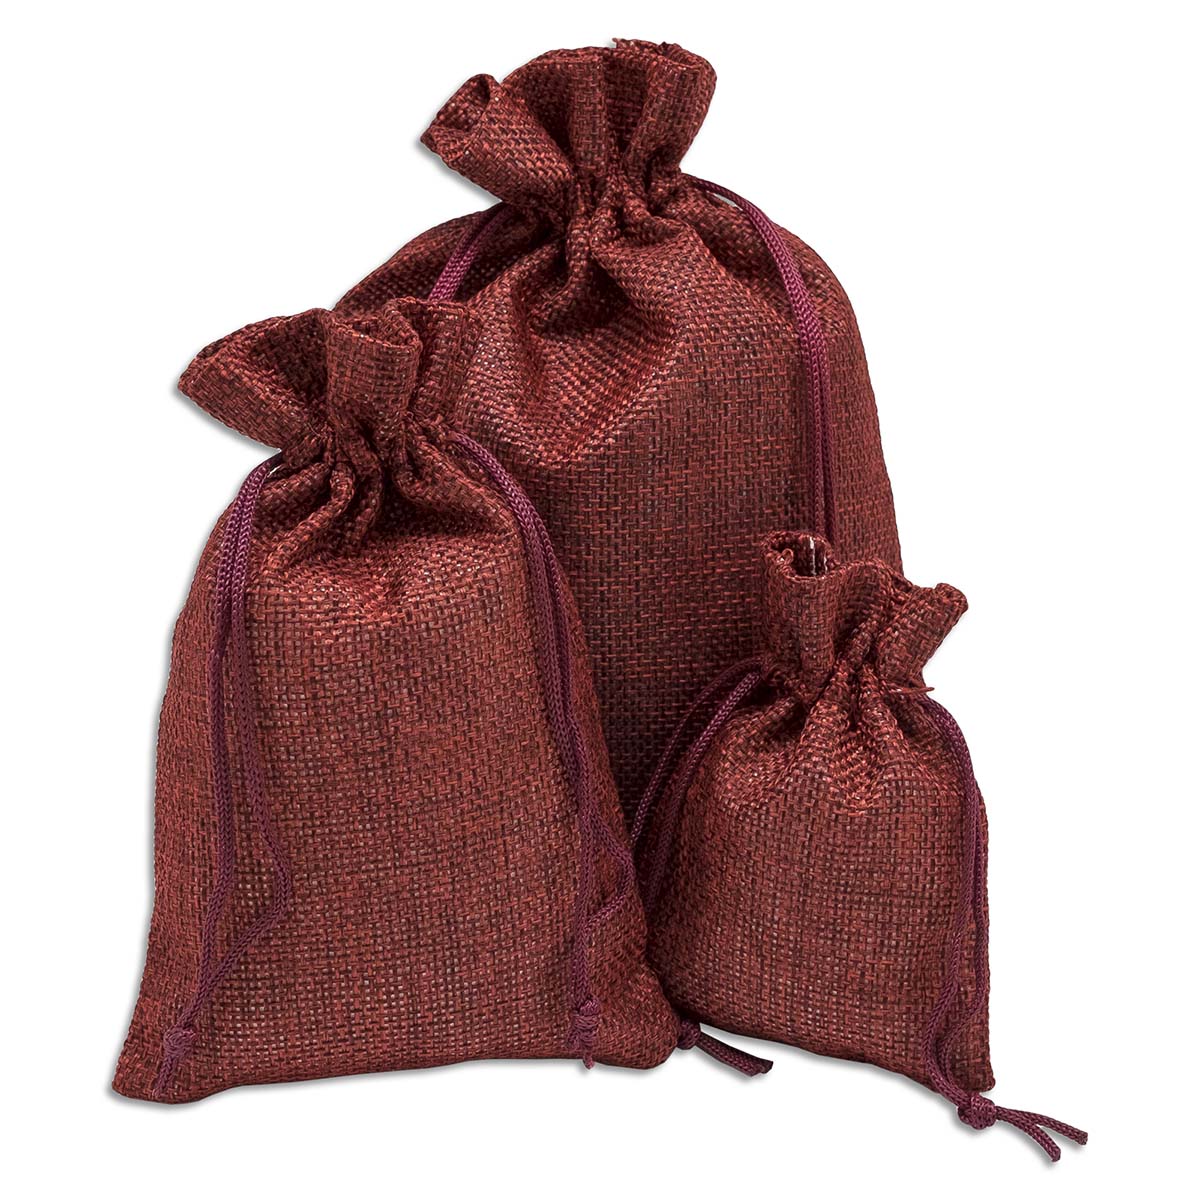 3" x 4" Maroon Linen Burlap Drawstring Gift Bags